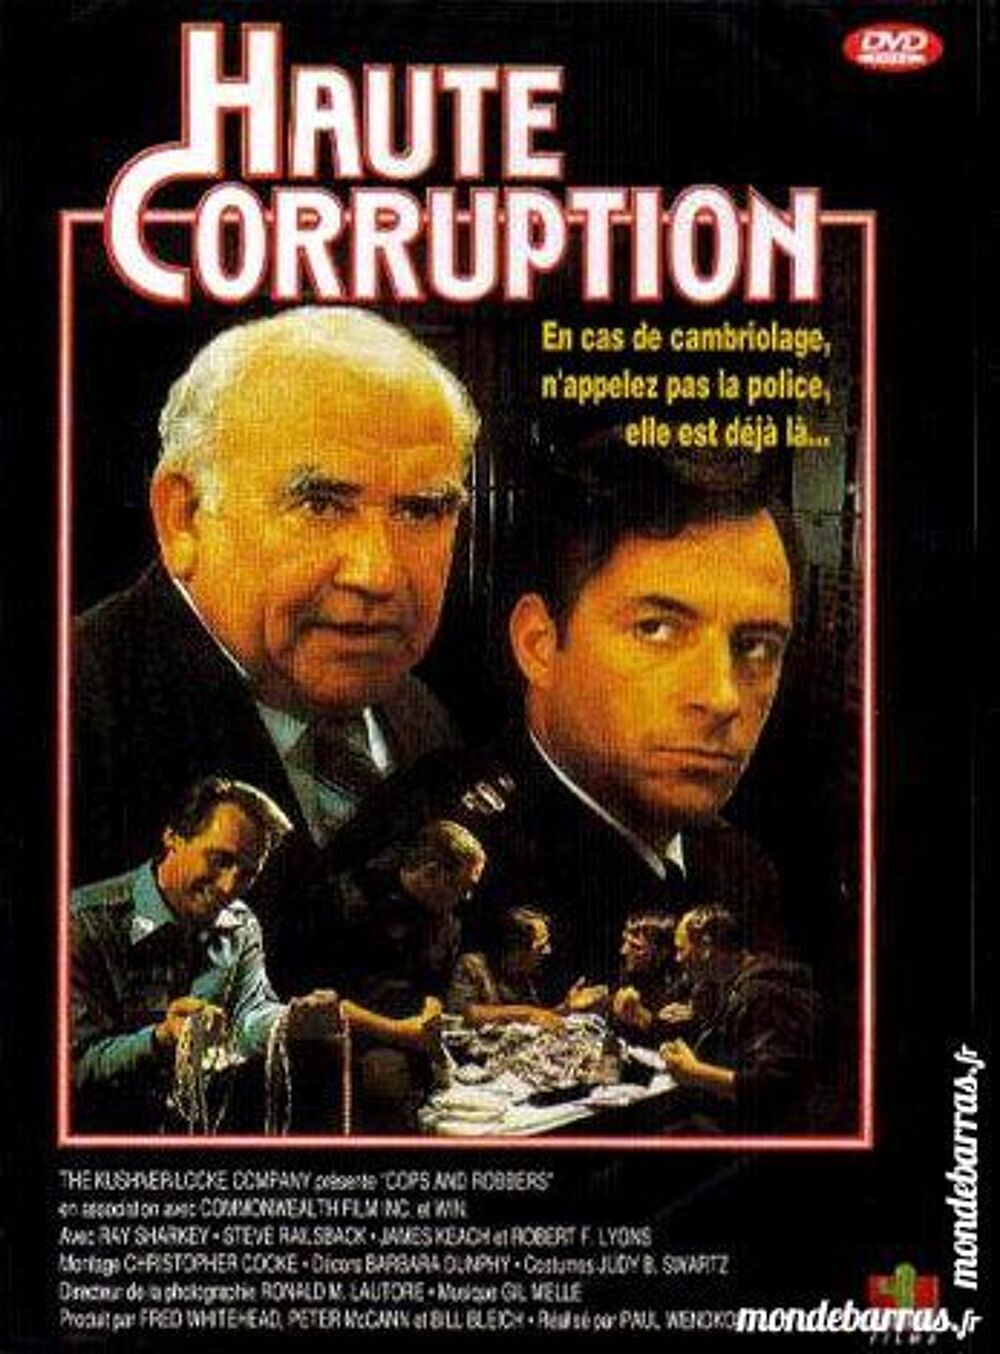 Dvd: Haute corruption (518) DVD et blu-ray